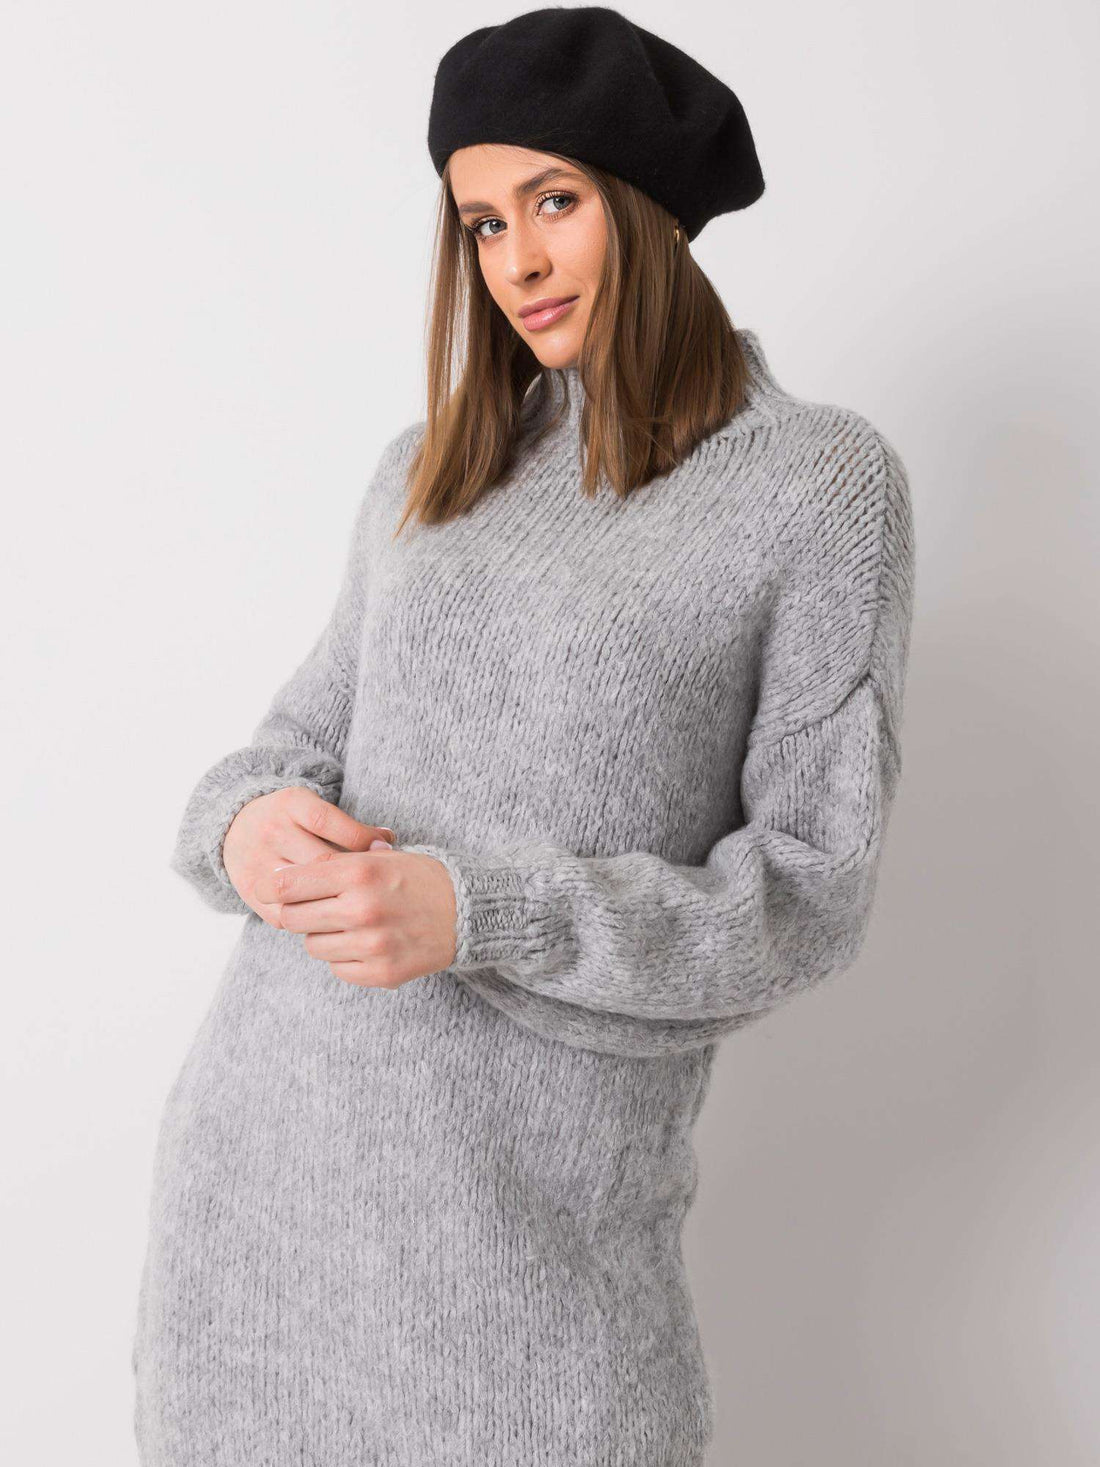 Turtleneck Grey Knitted Dress